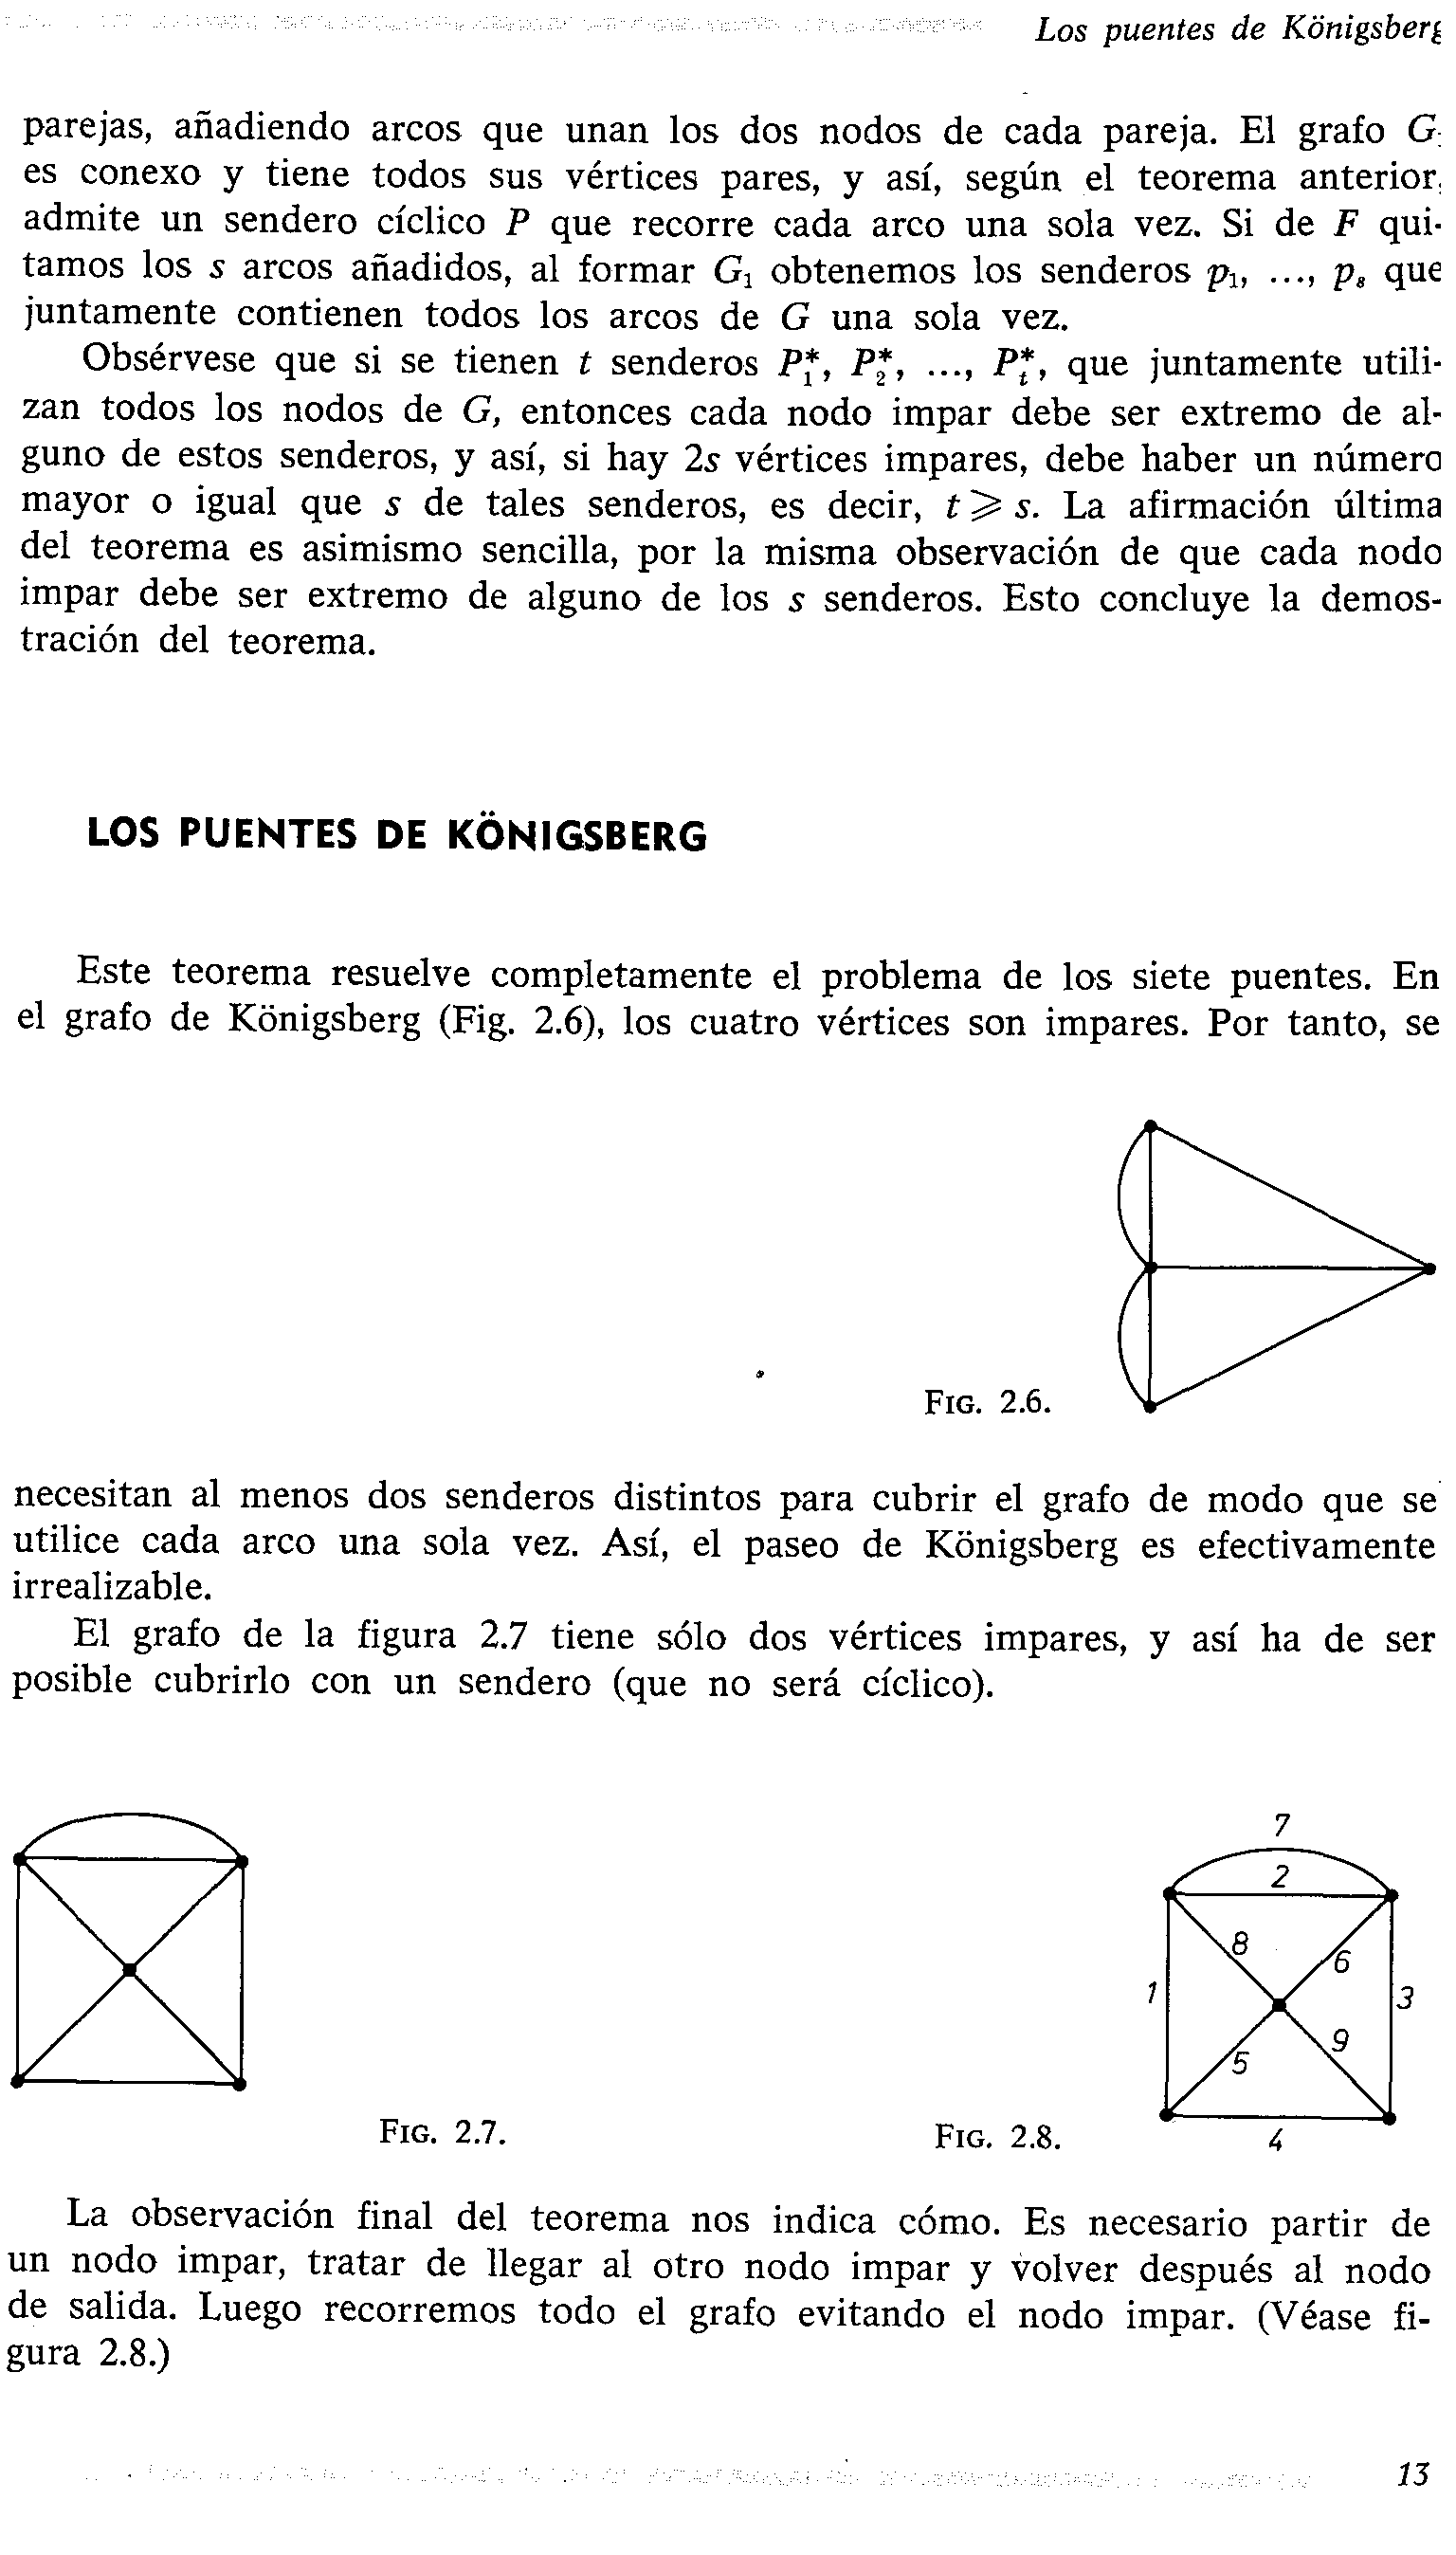 Graphics (p.7-1)